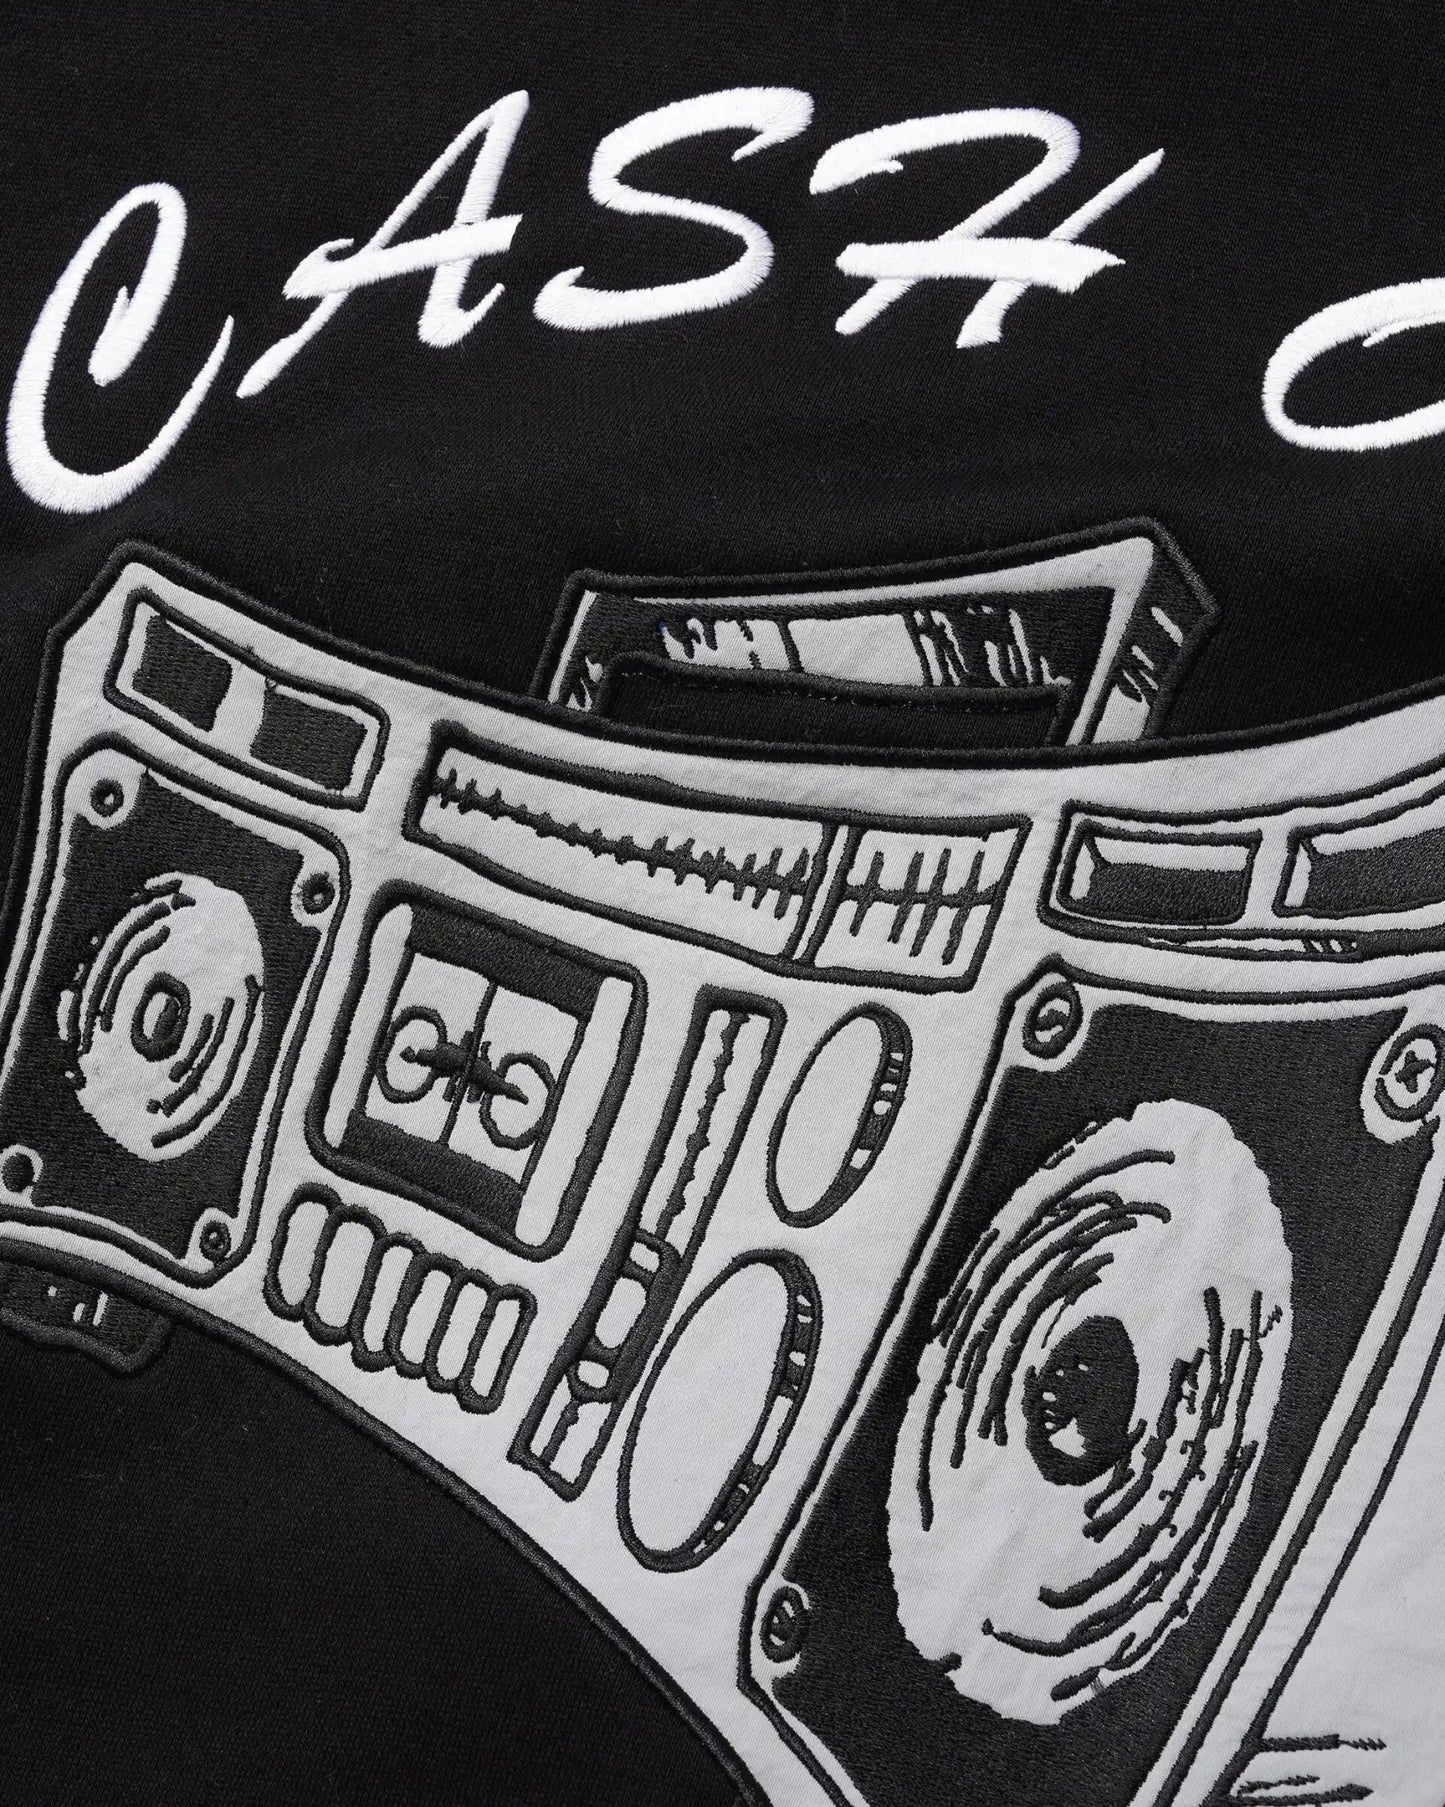 Cash Only Boombox Nylon Applique Crewneck Sweatshirt, black - Tiki Room Skateboards - 3